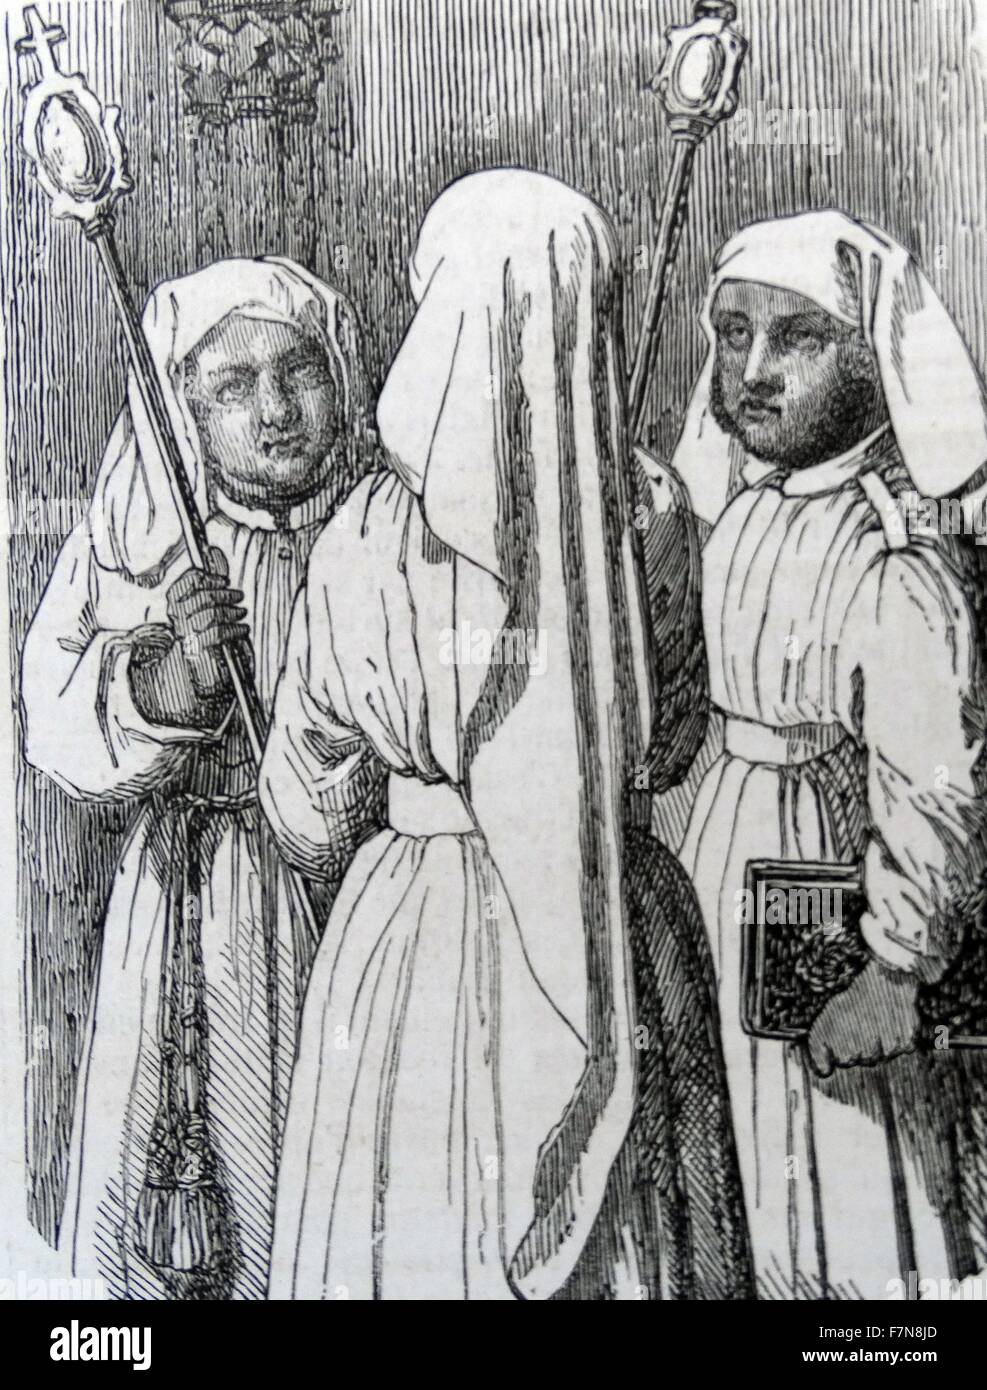 medieval nun habit